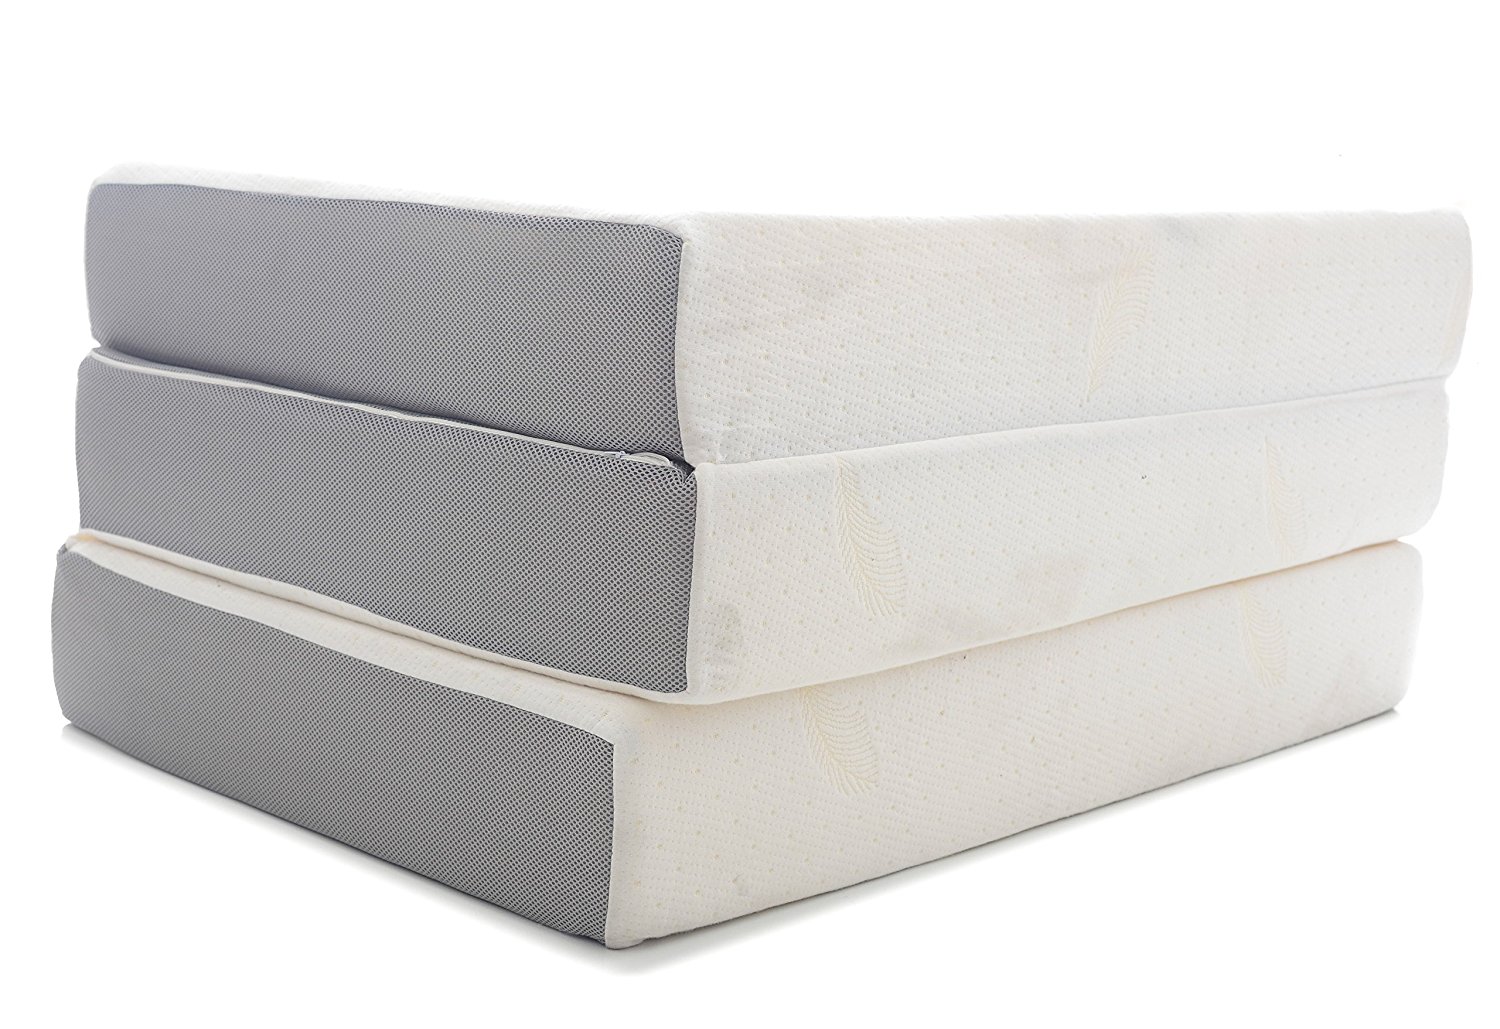 Find 62+ Charming milliard foam tri-fold mattress For Every Budget